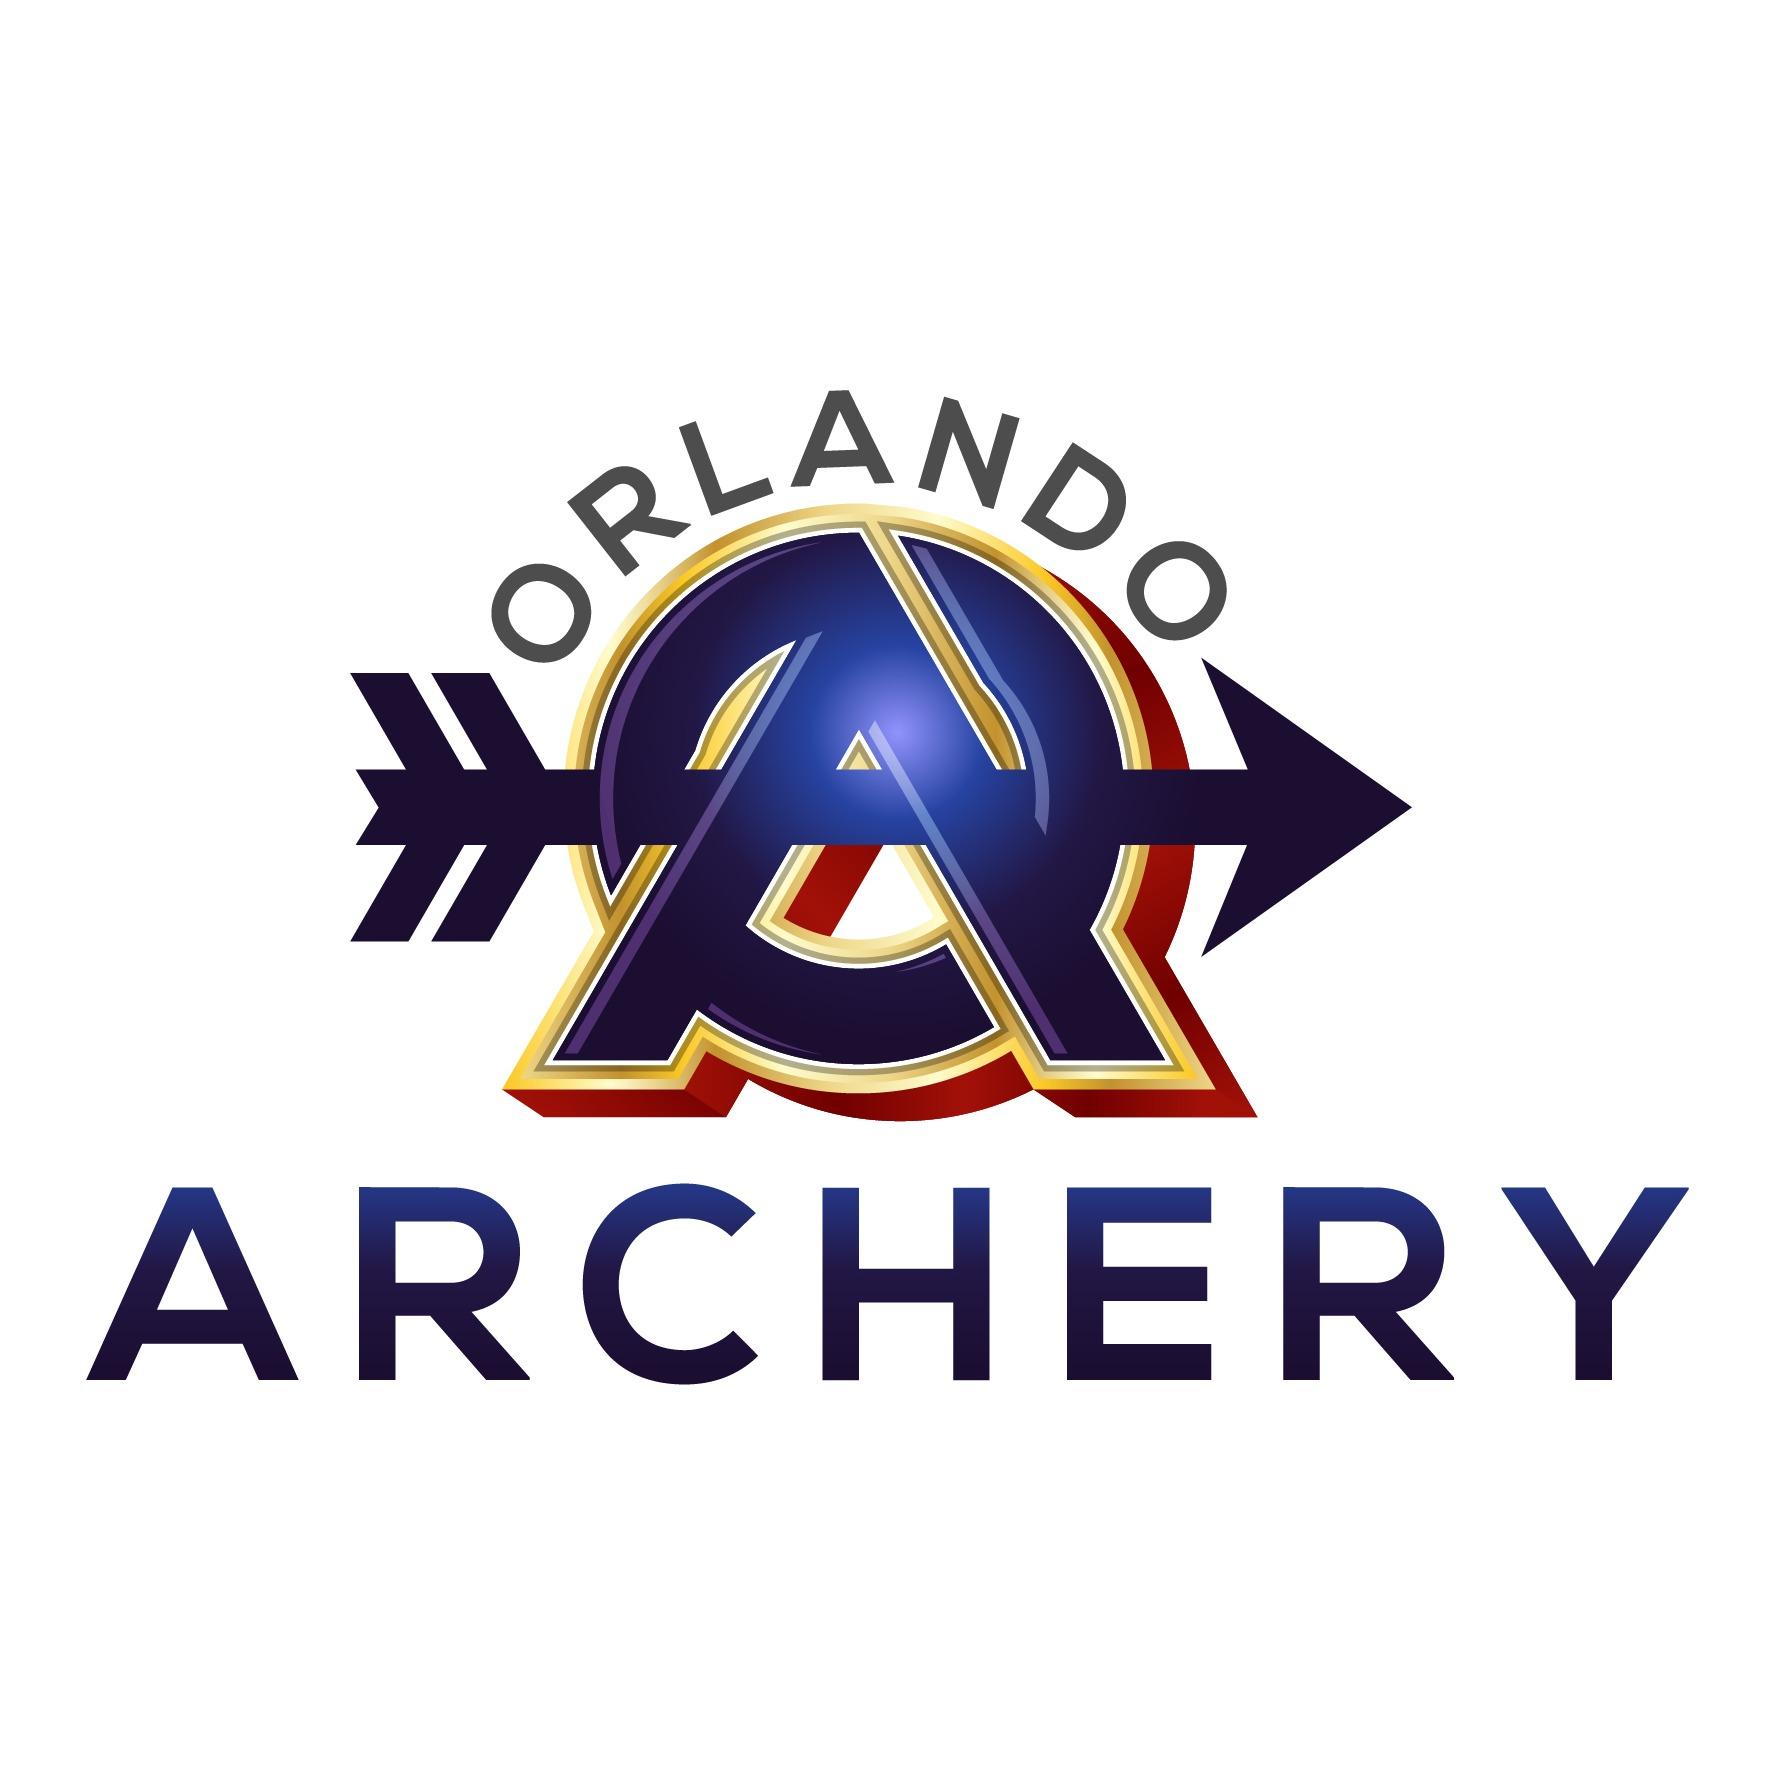 Orlando Archery Academy Photo